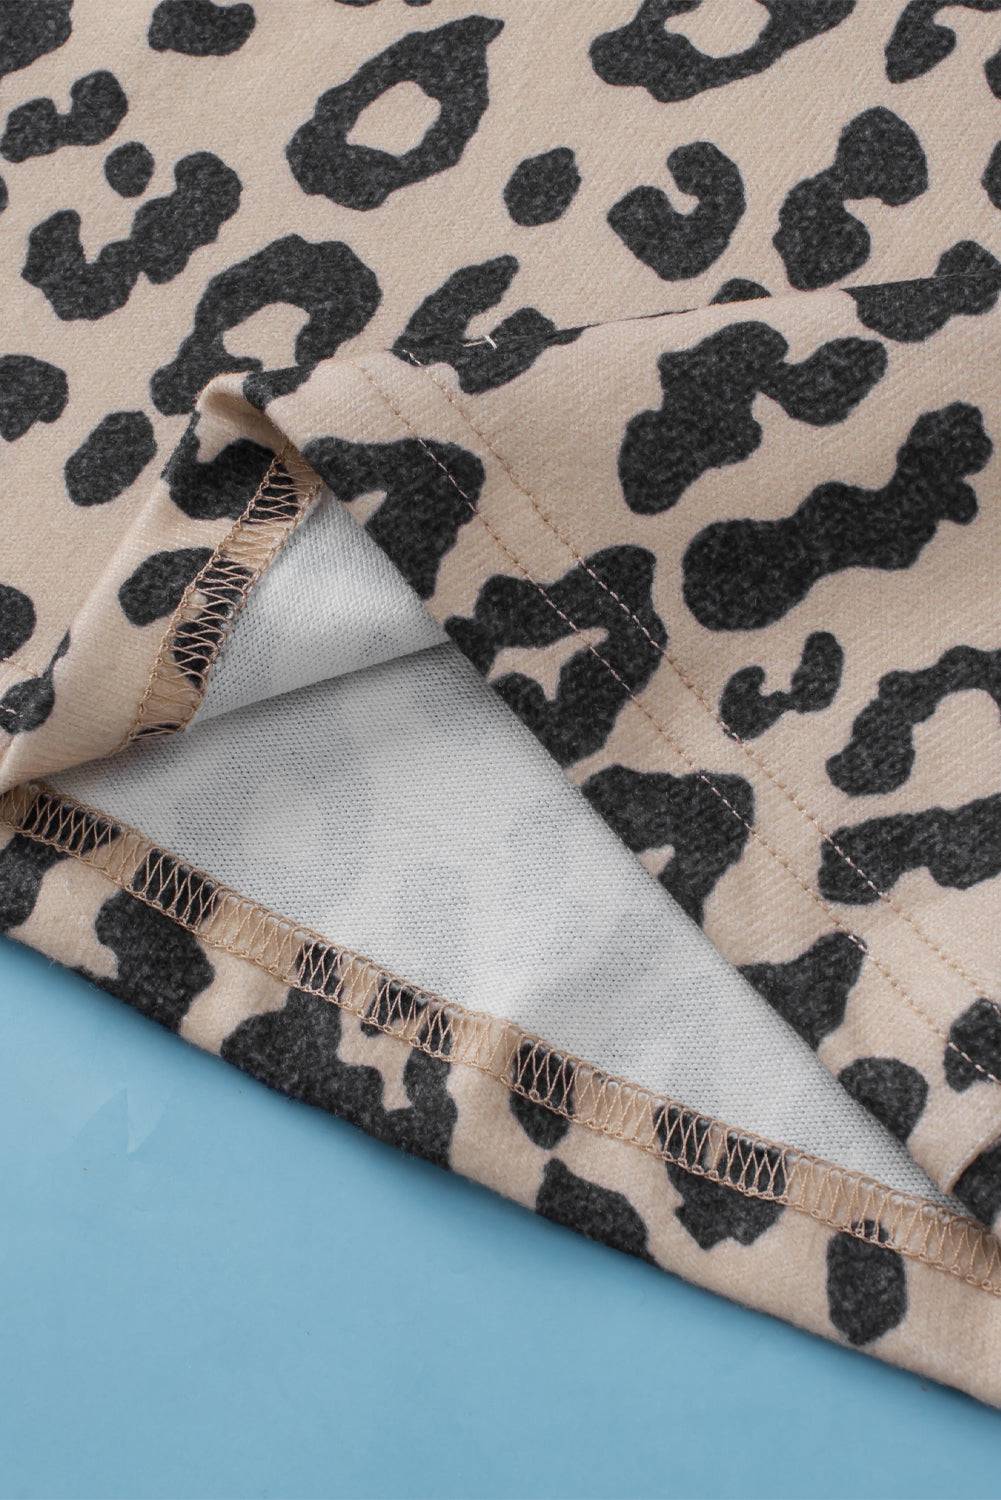 a close up of a leopard print fabric